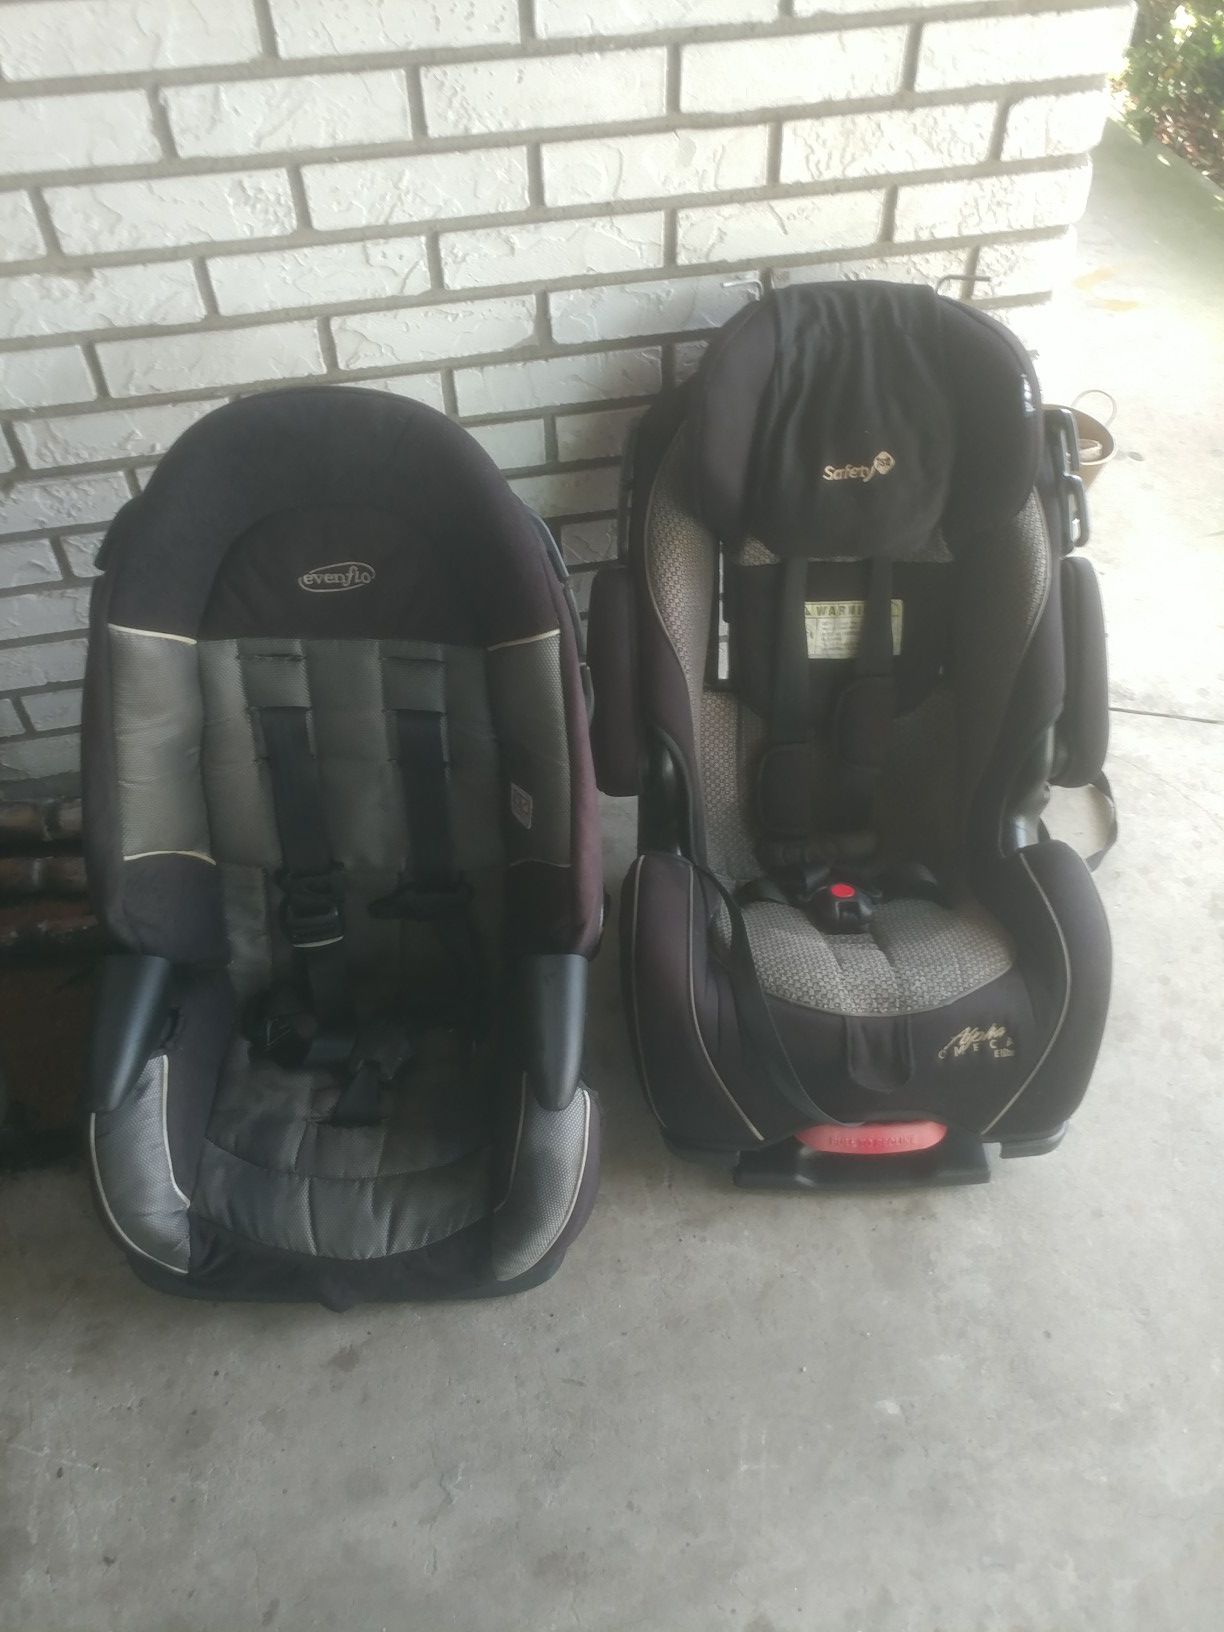 2 Car seats